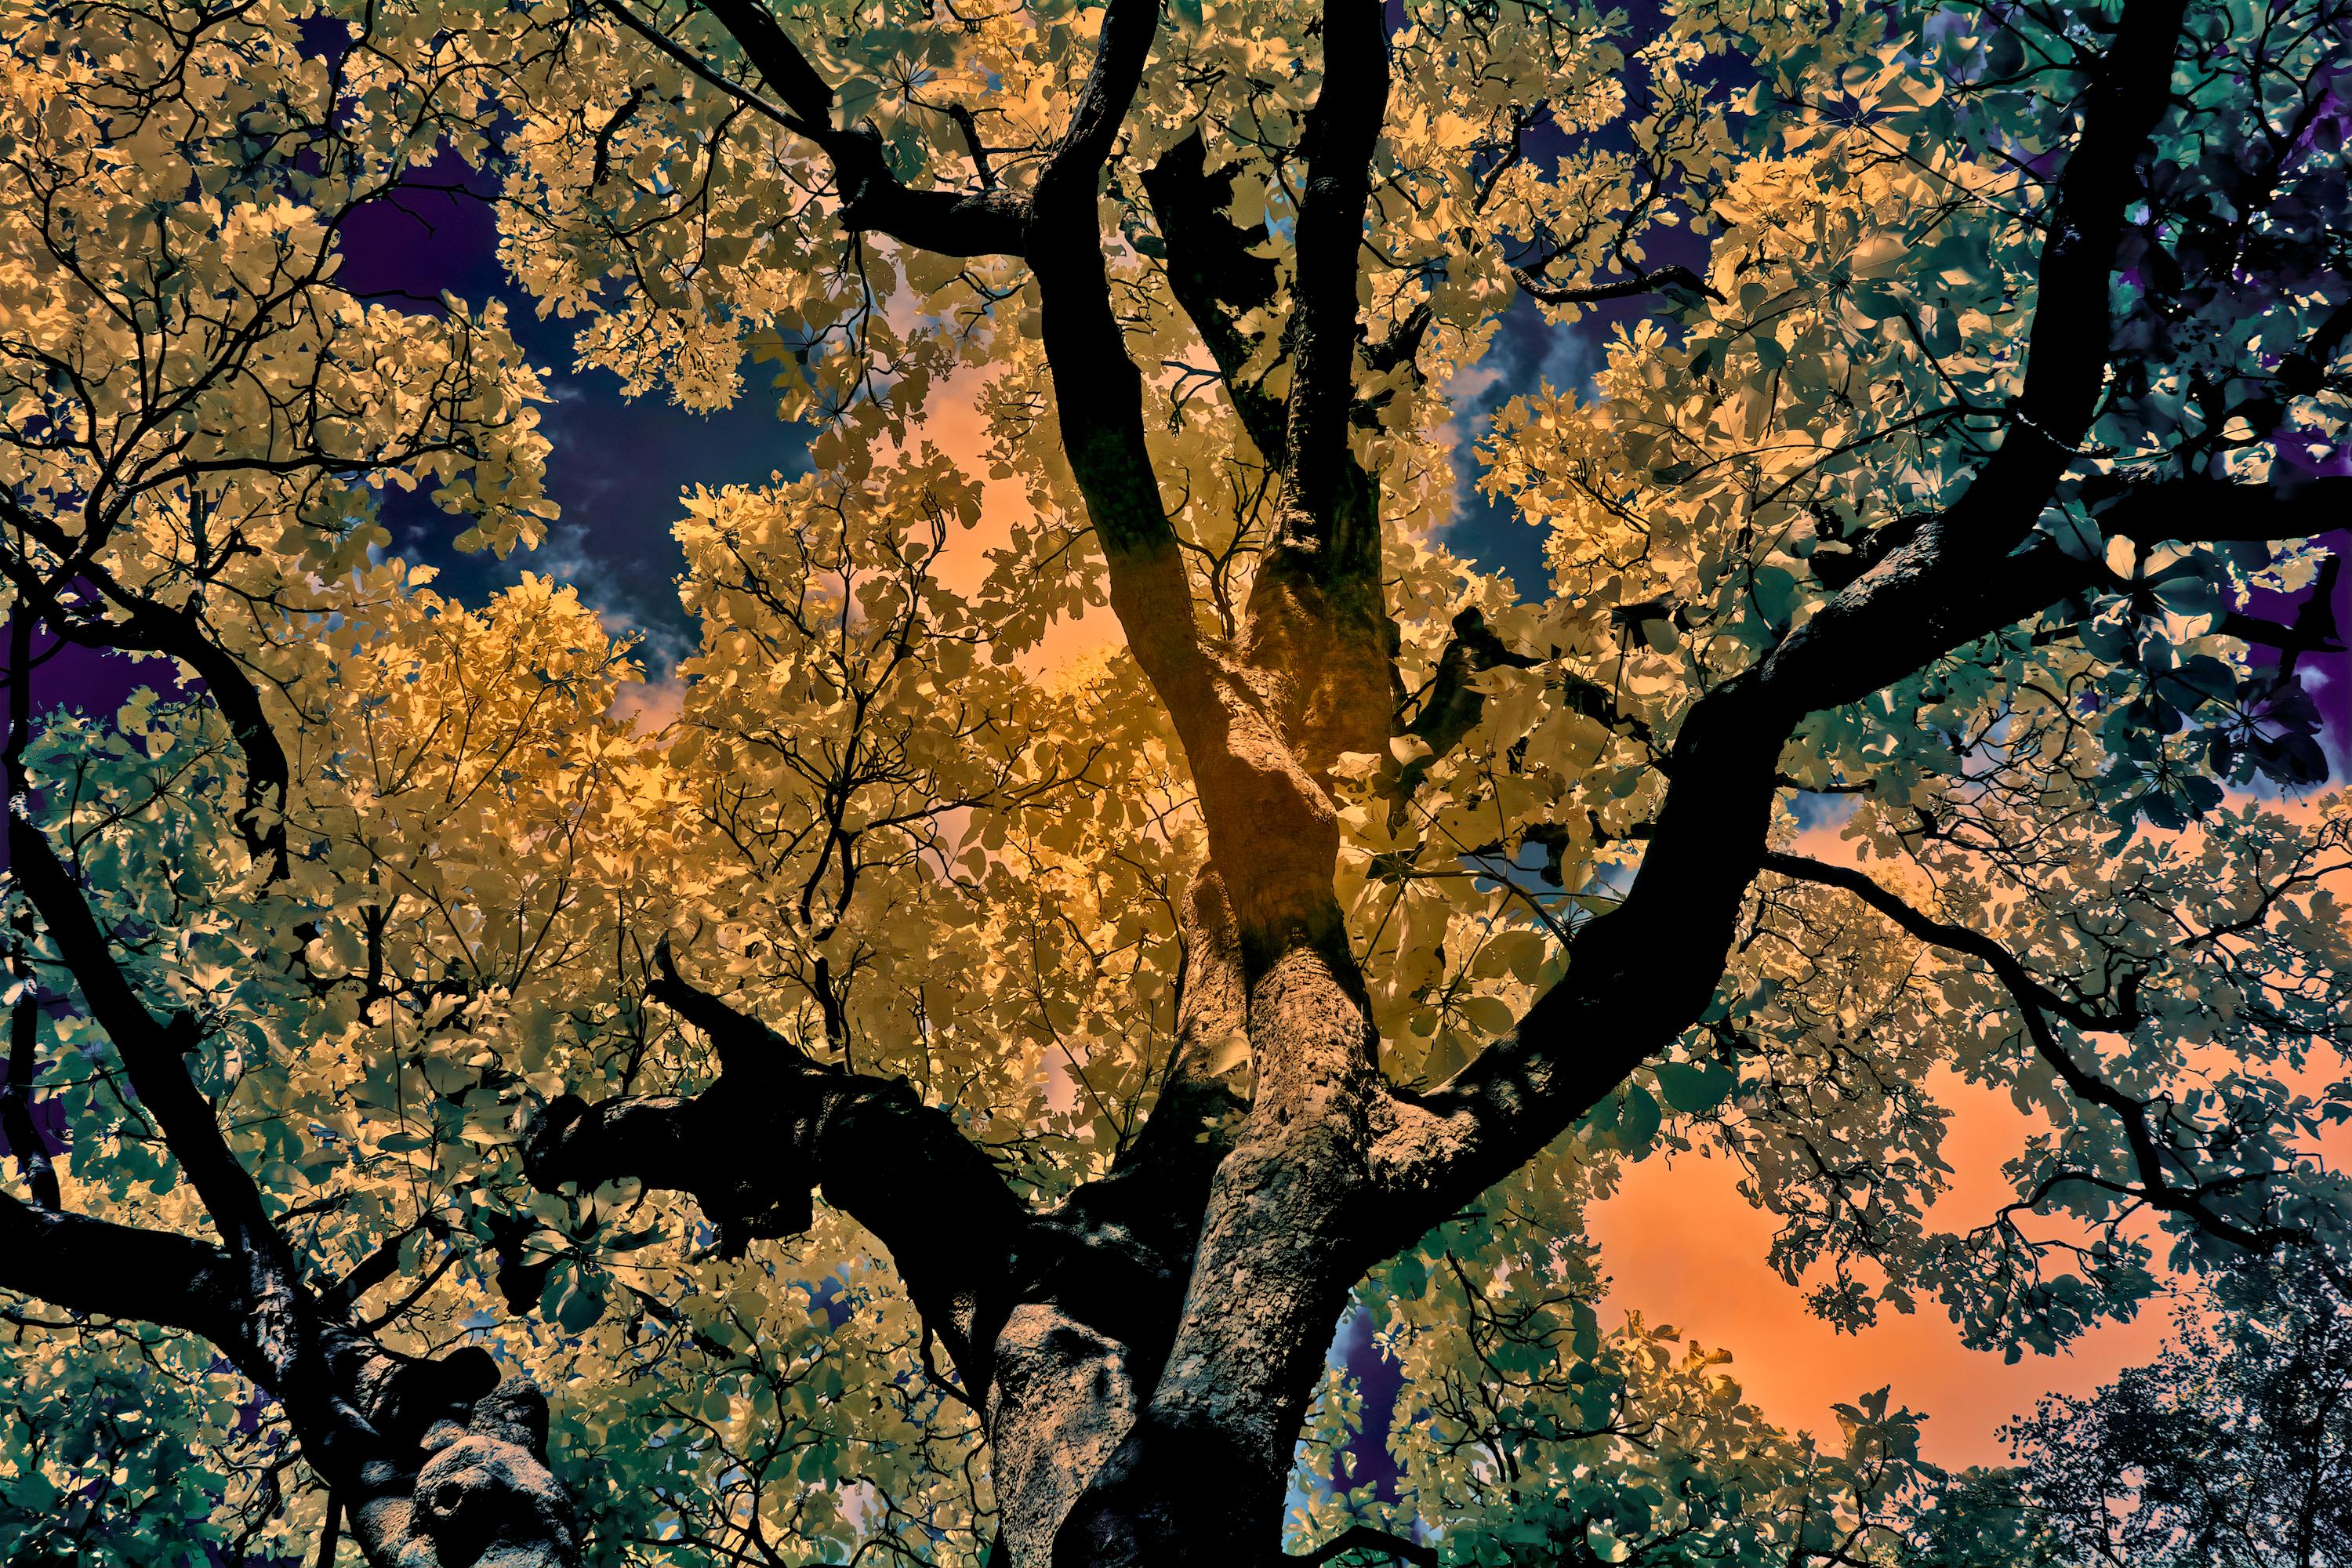 Aditya Dicky Singh Landscape Photograph – Landschaft Großes Foto Natur Baum Wildnis Indien Orange Blau Ausgabe 4/8